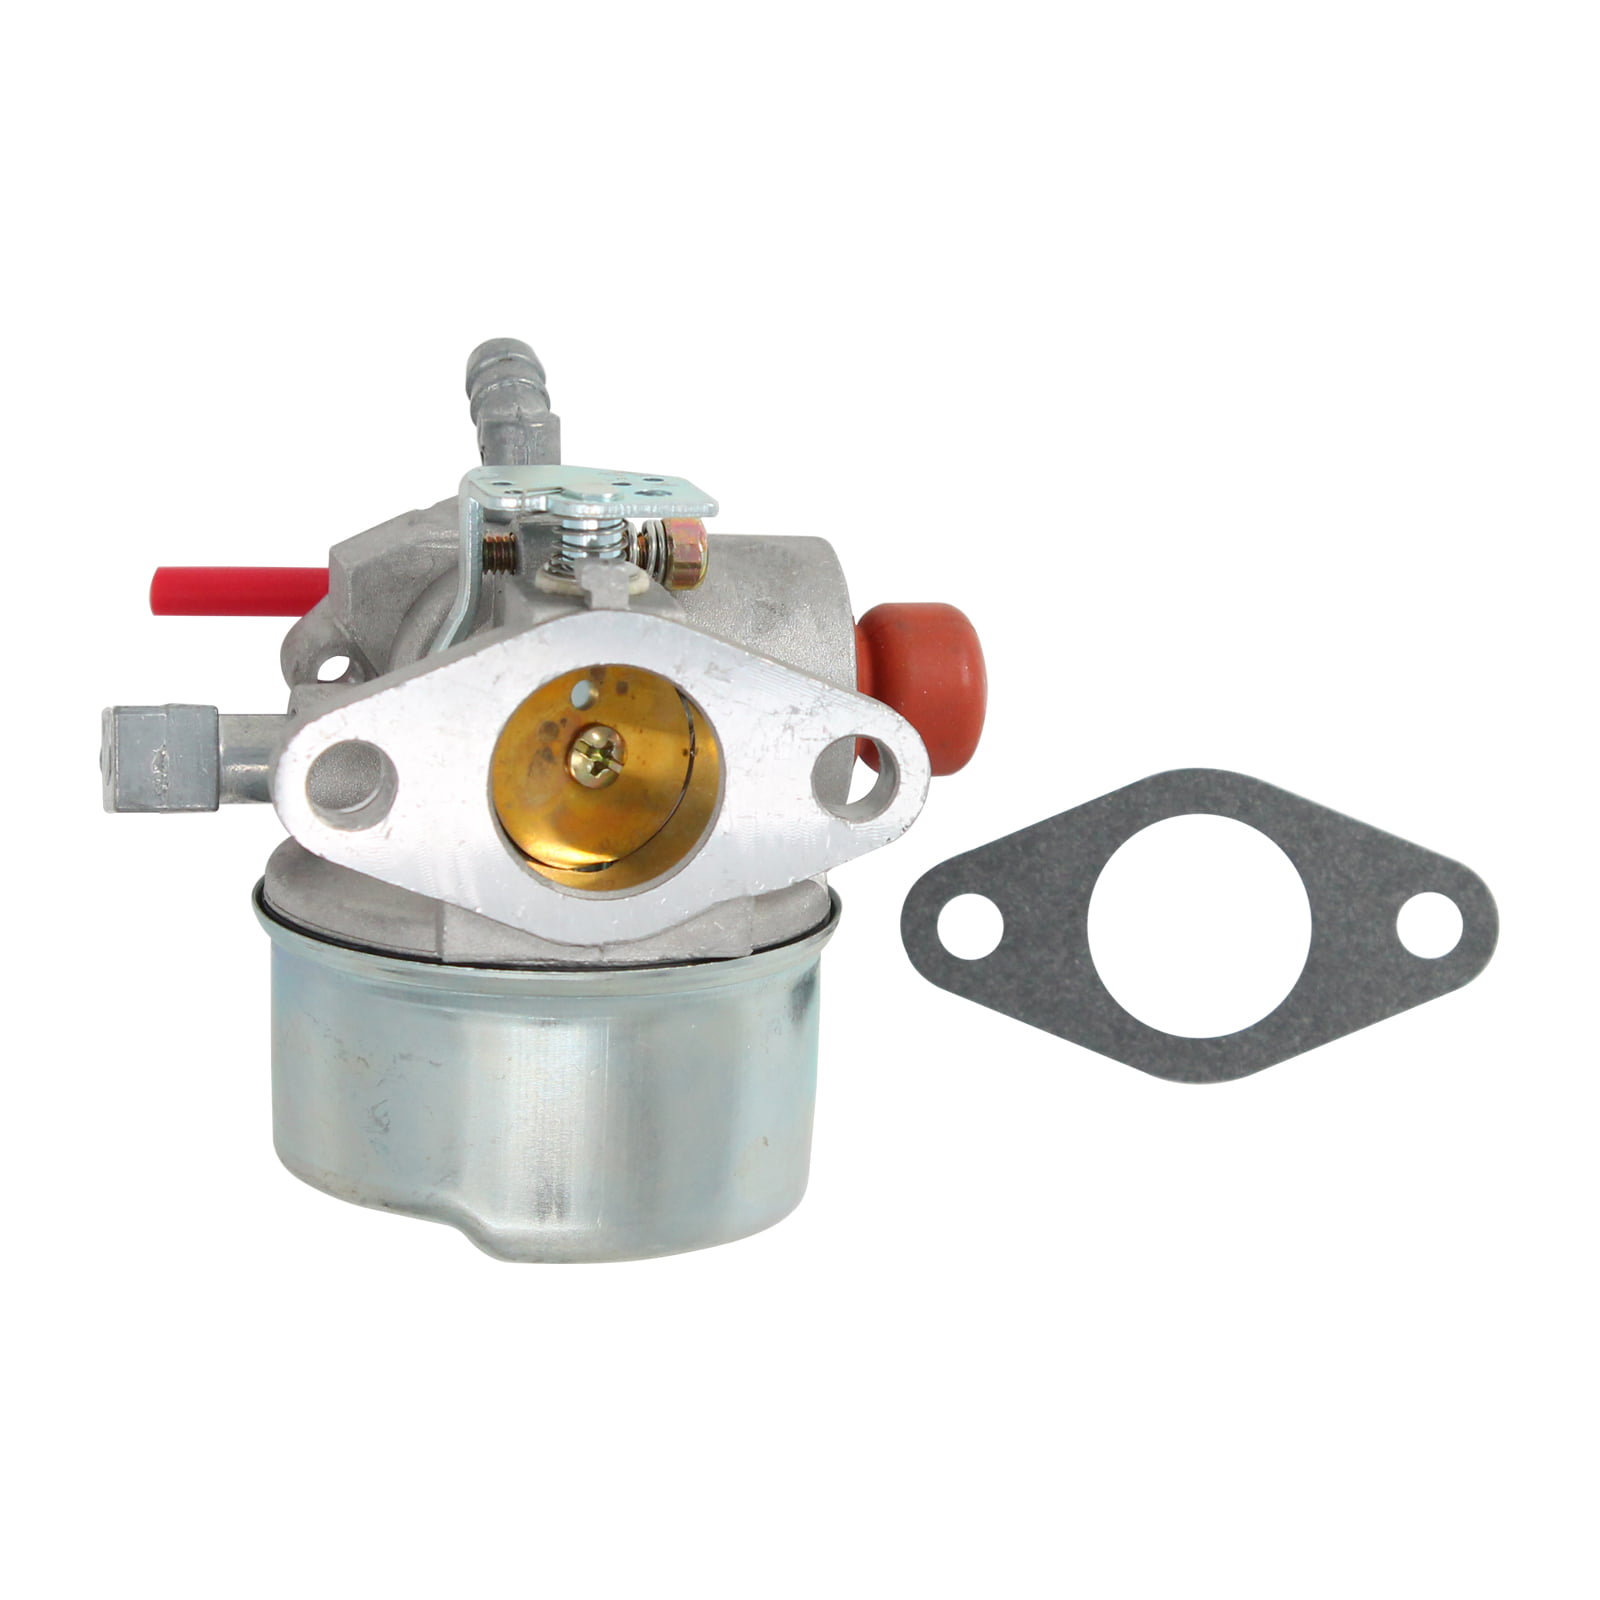 Details about   Carburetor pump Kit w/ Air filter Fit For Tecumseh 640271 640303 640350 